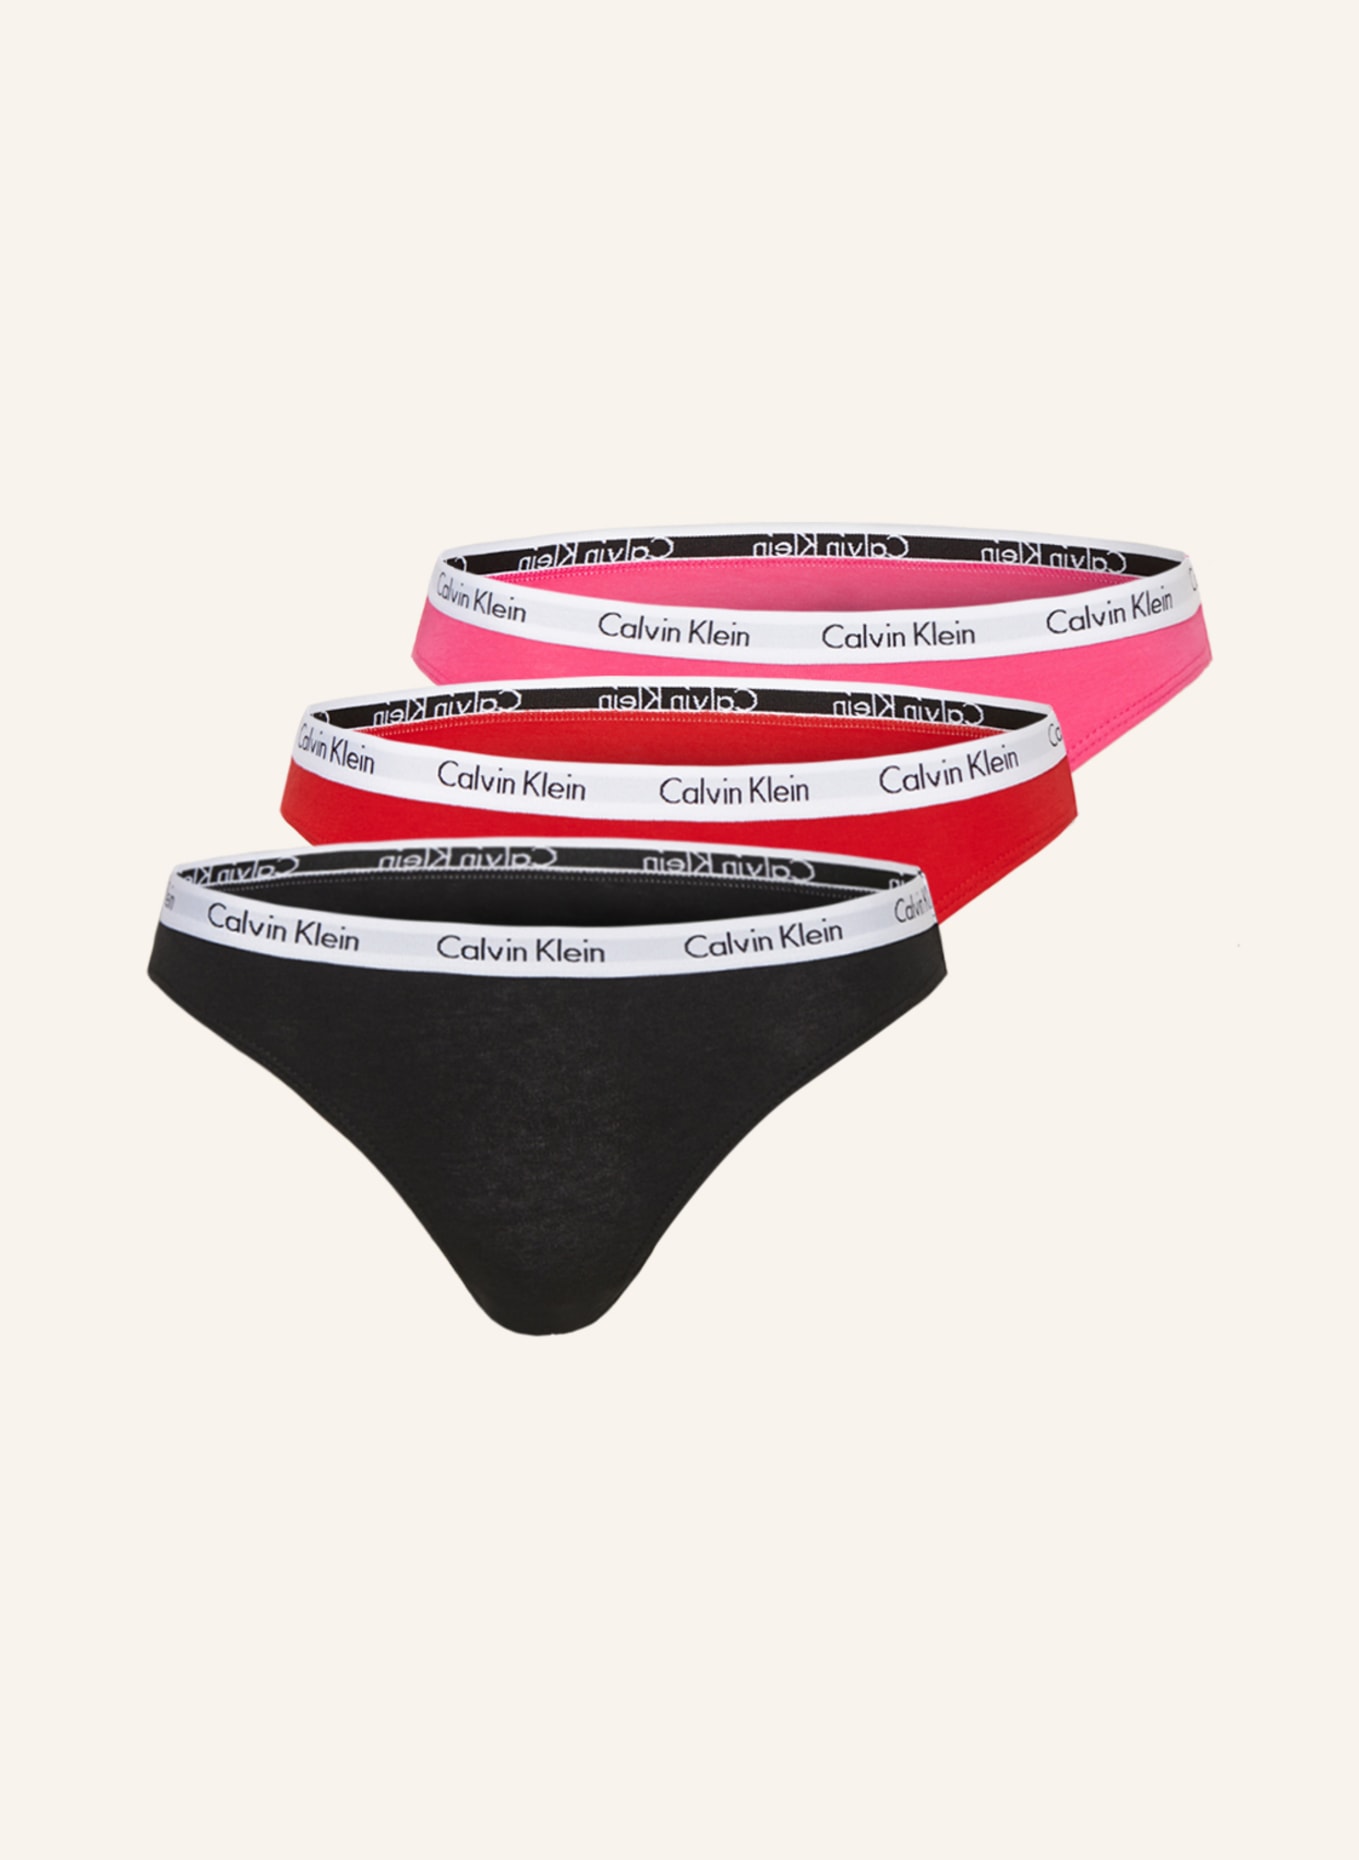 Calvin Klein 3-pack briefs CAROUSEL in red/ pink/ black